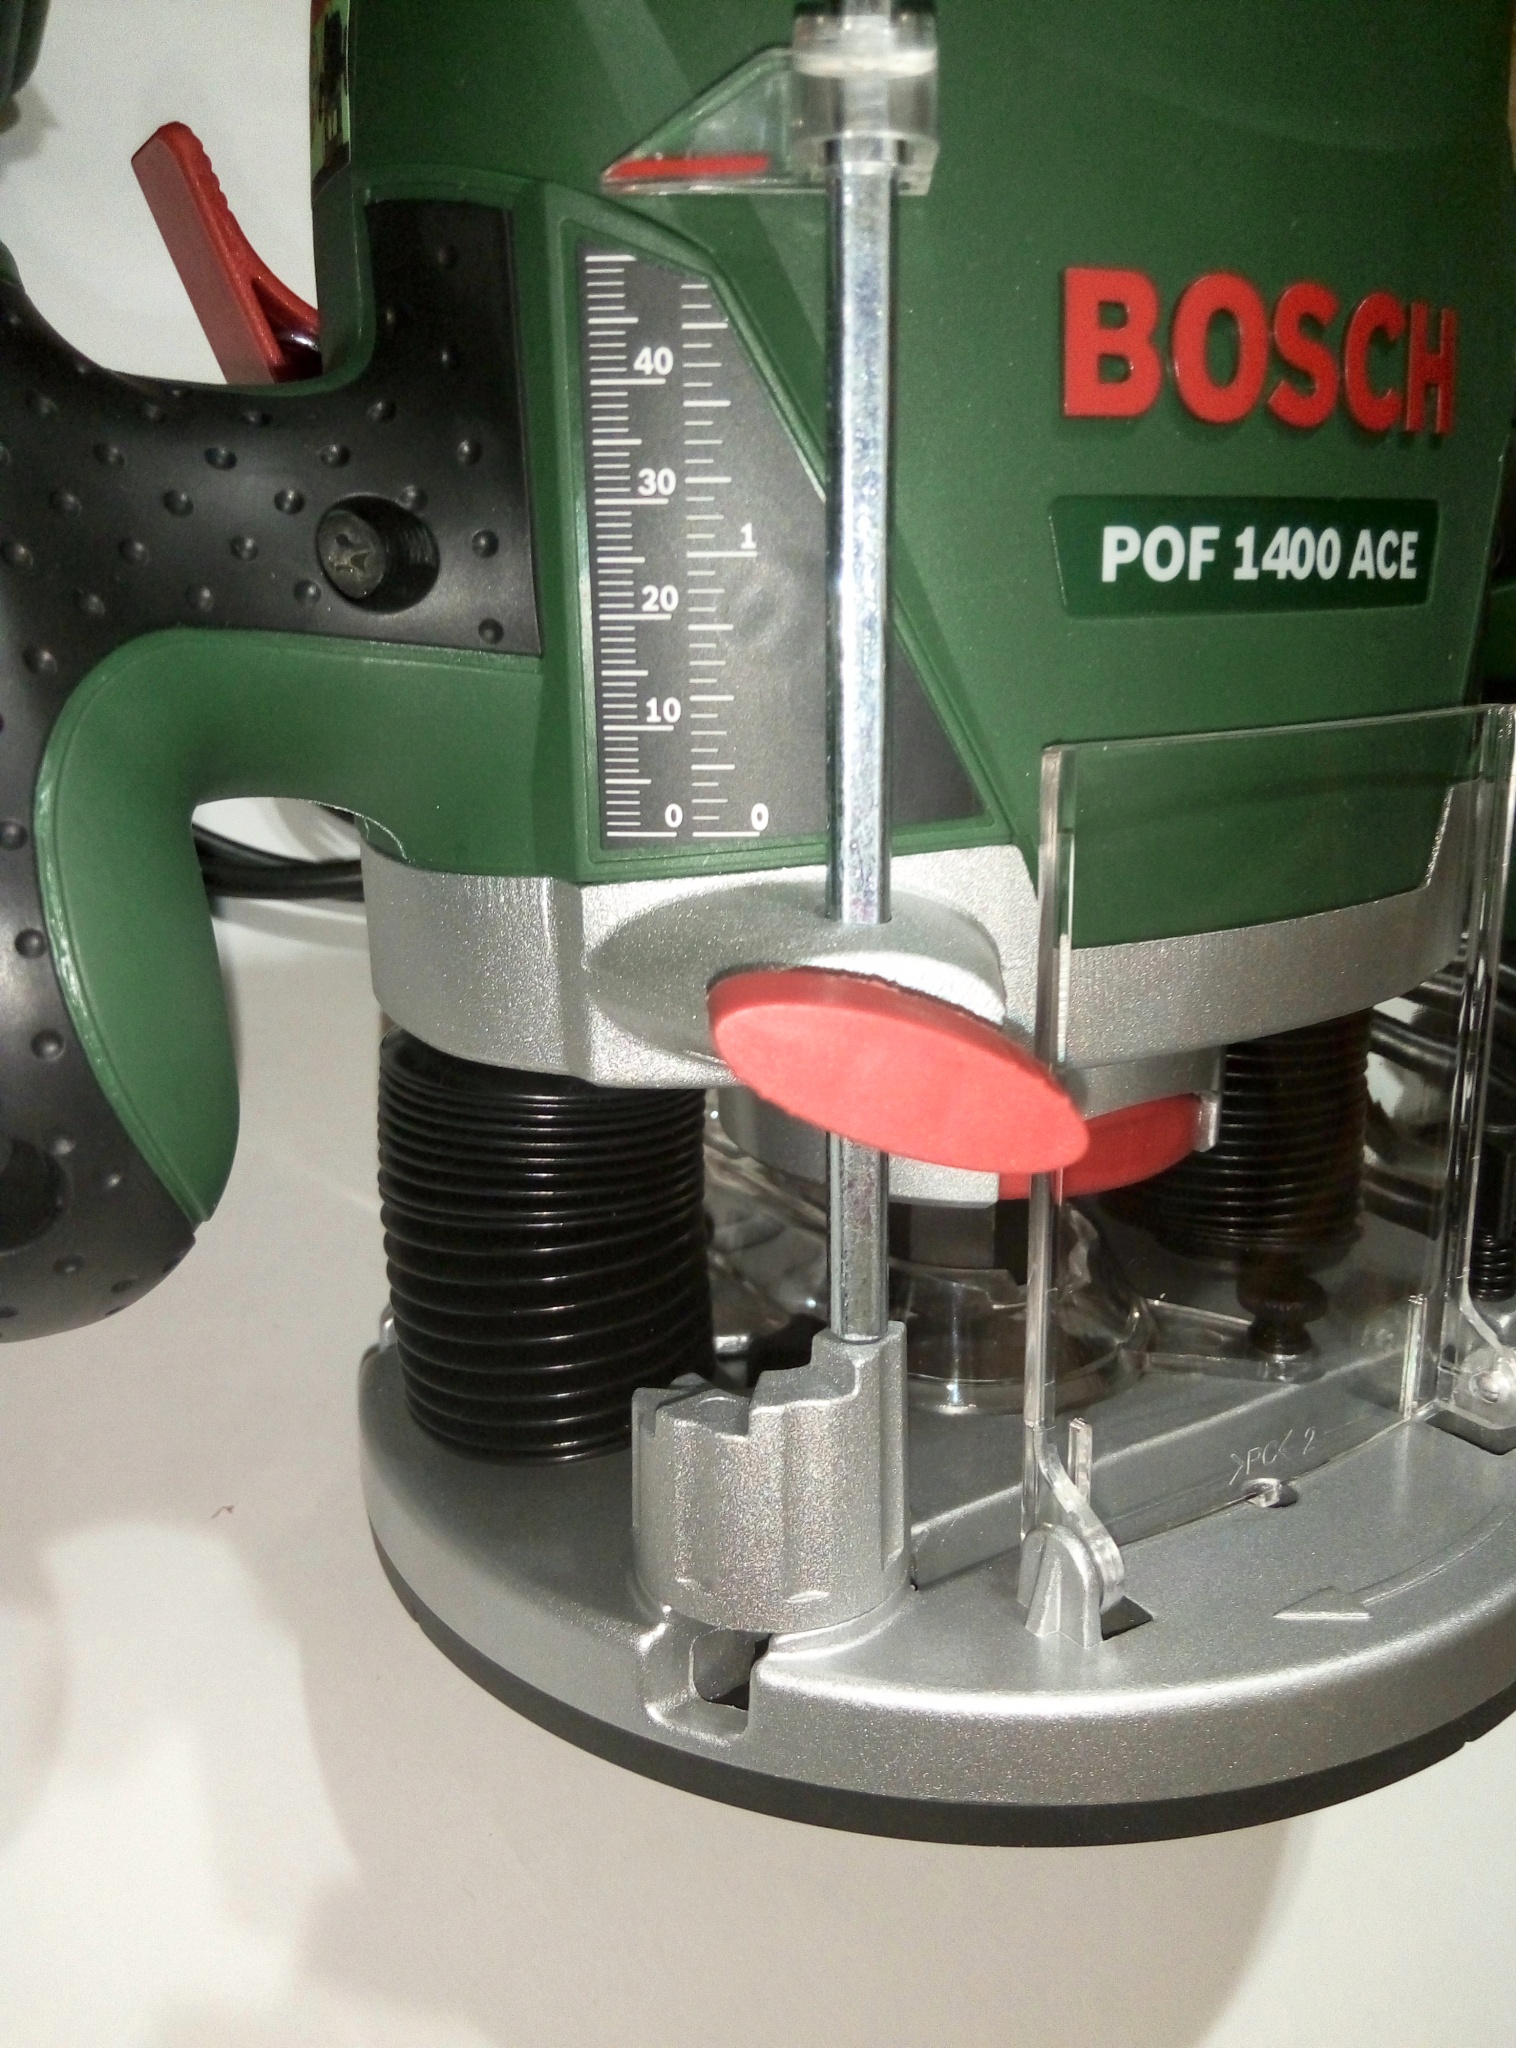 Bosch POF 1400 Ace + 6 фрез